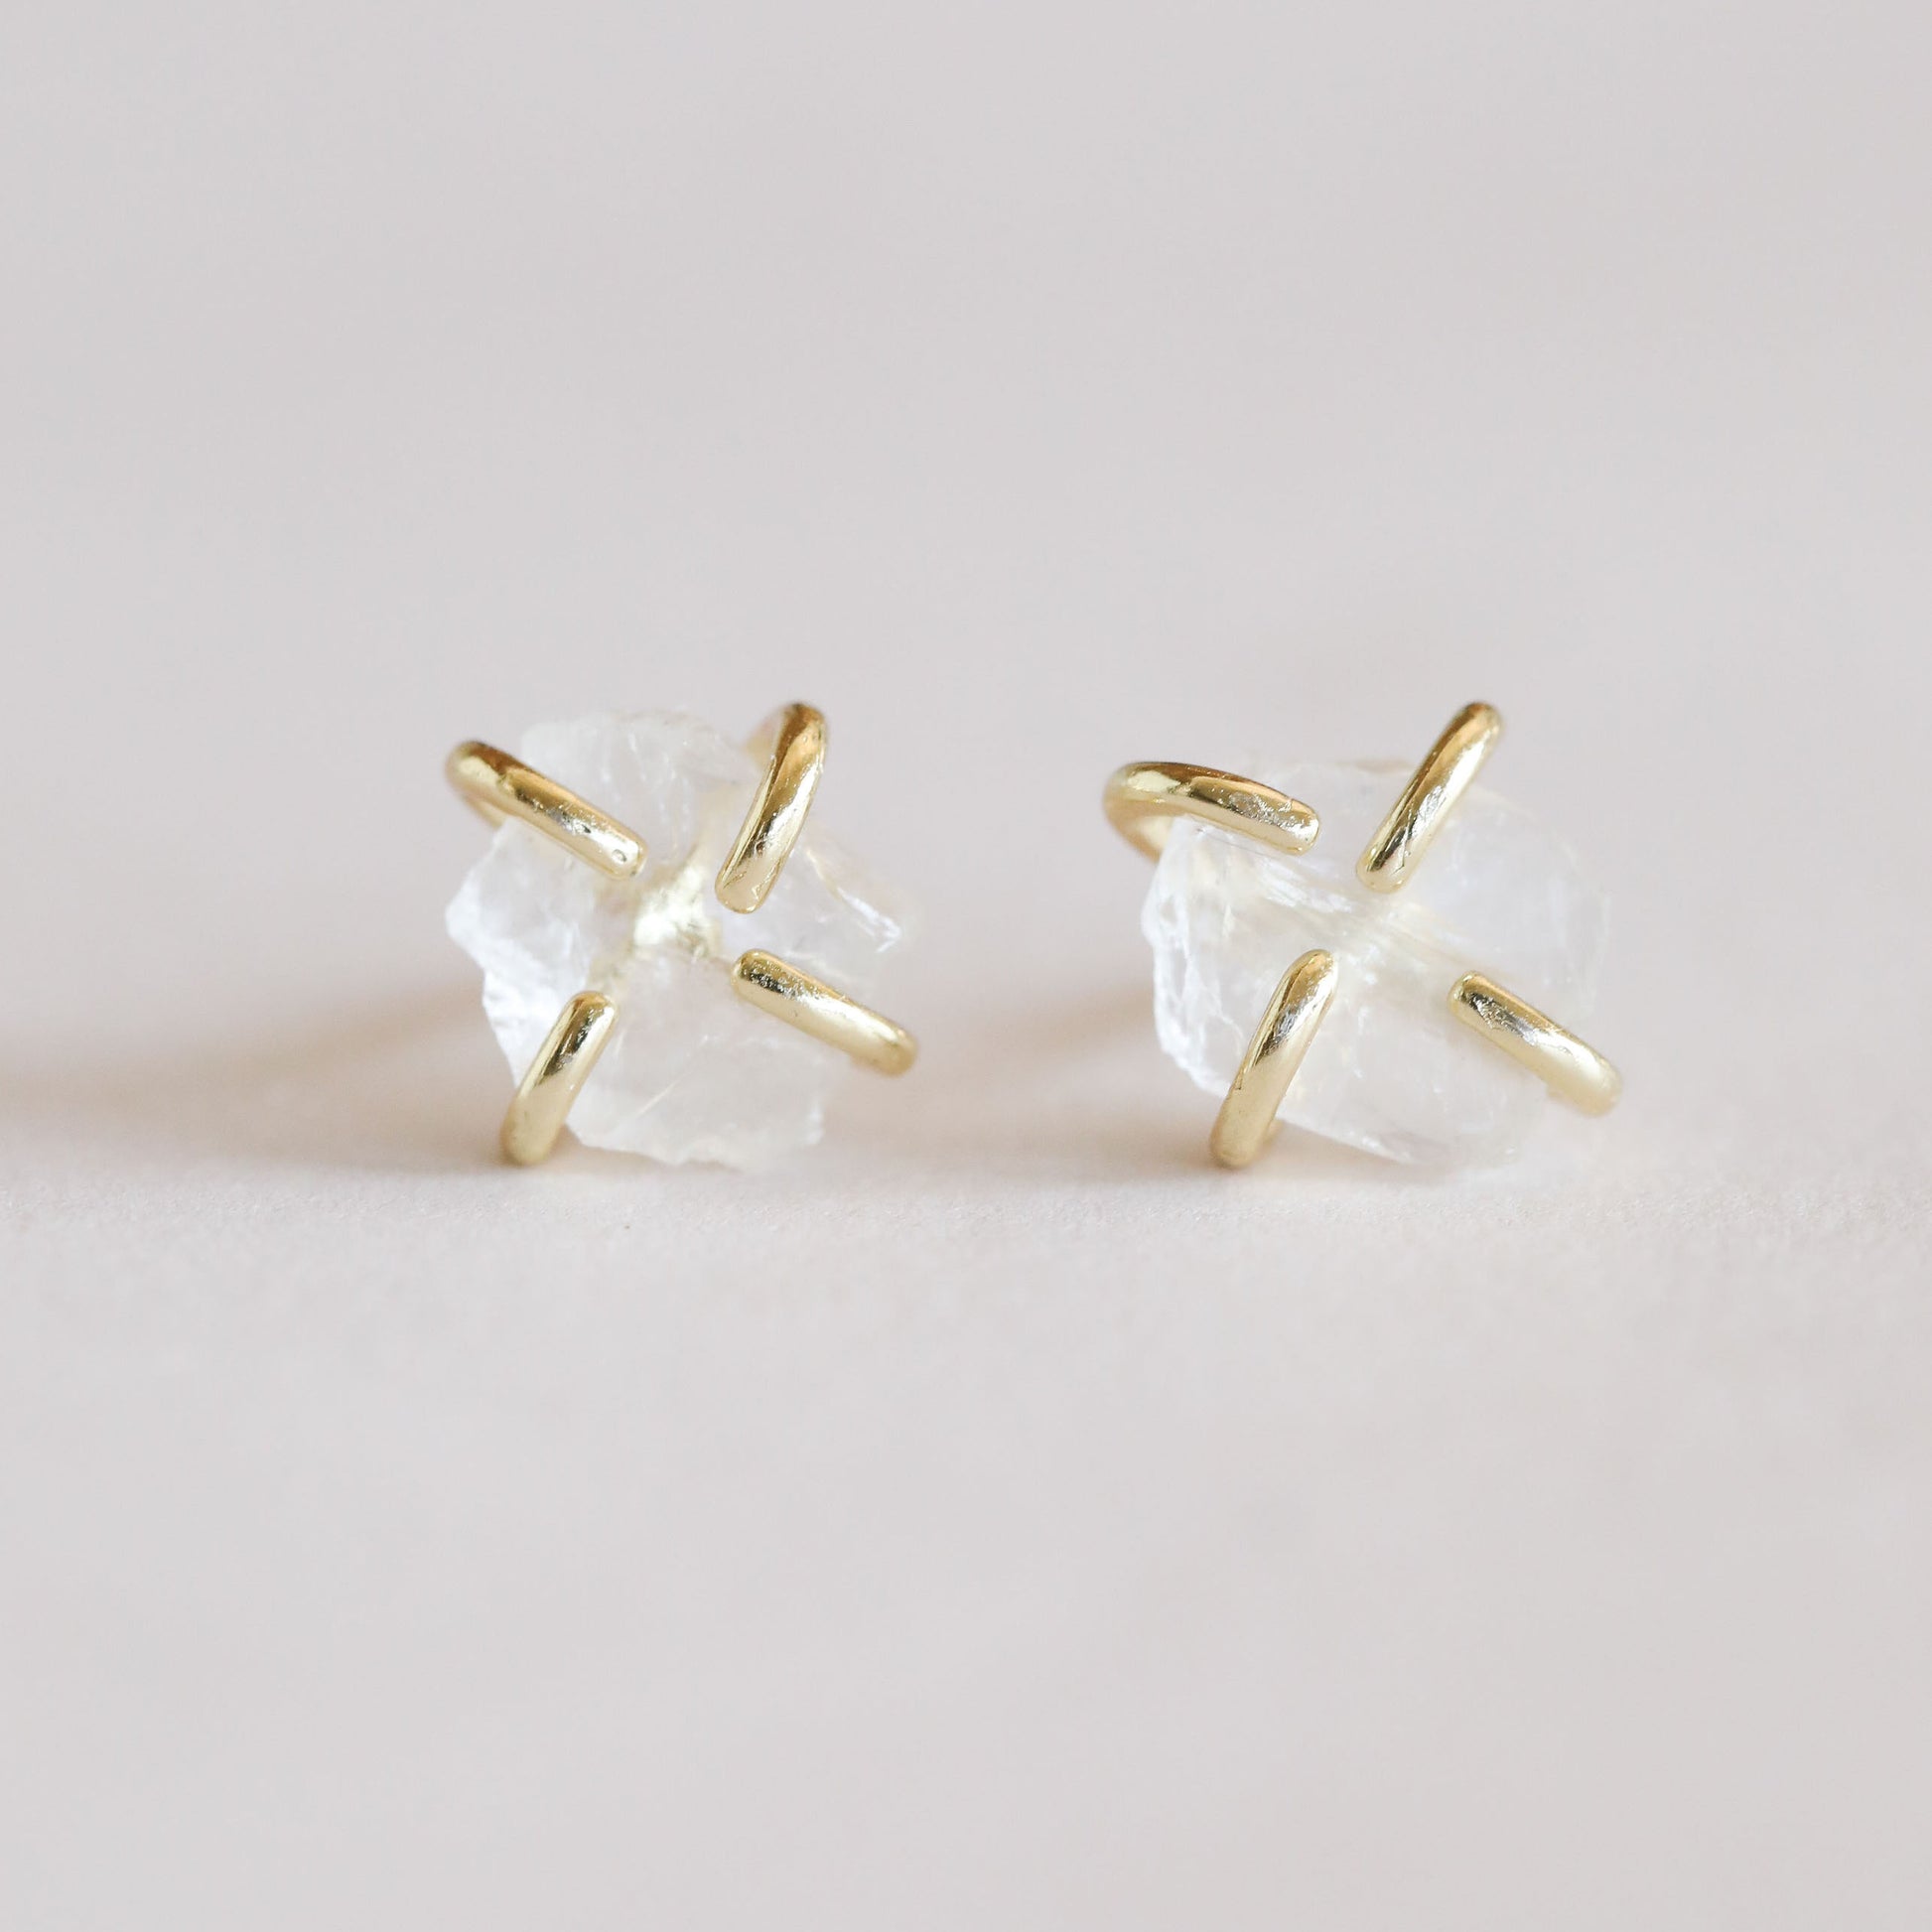 Clear glass long stone prong set Earrings – JPeace Designs